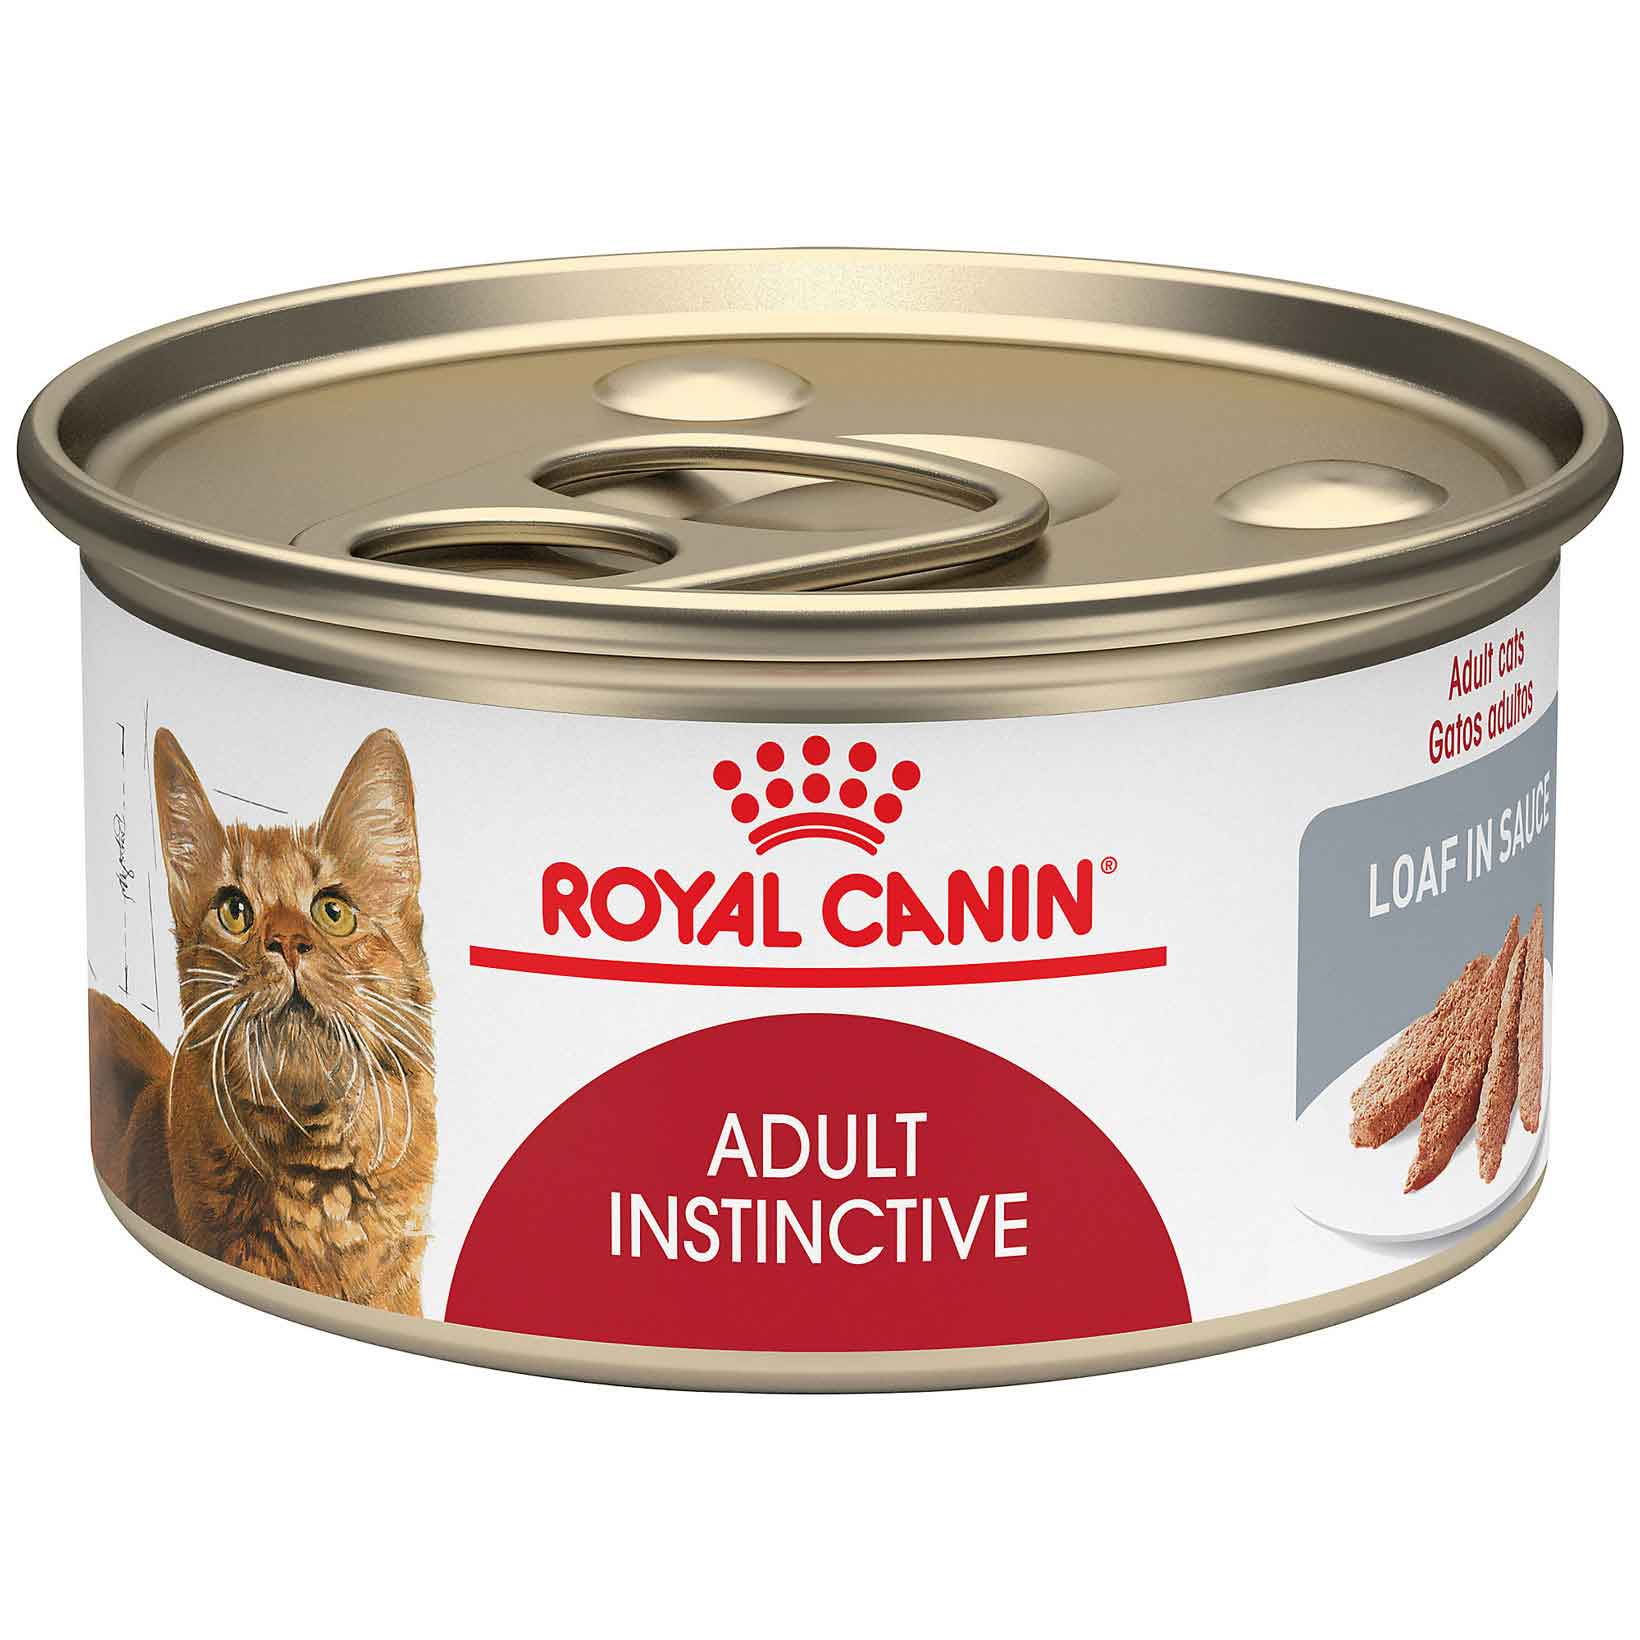 Royal Canin® Feline Health Nutrition™ Adult Instinctive Loaf In Sauce Canned Cat Food, 3 Ounces